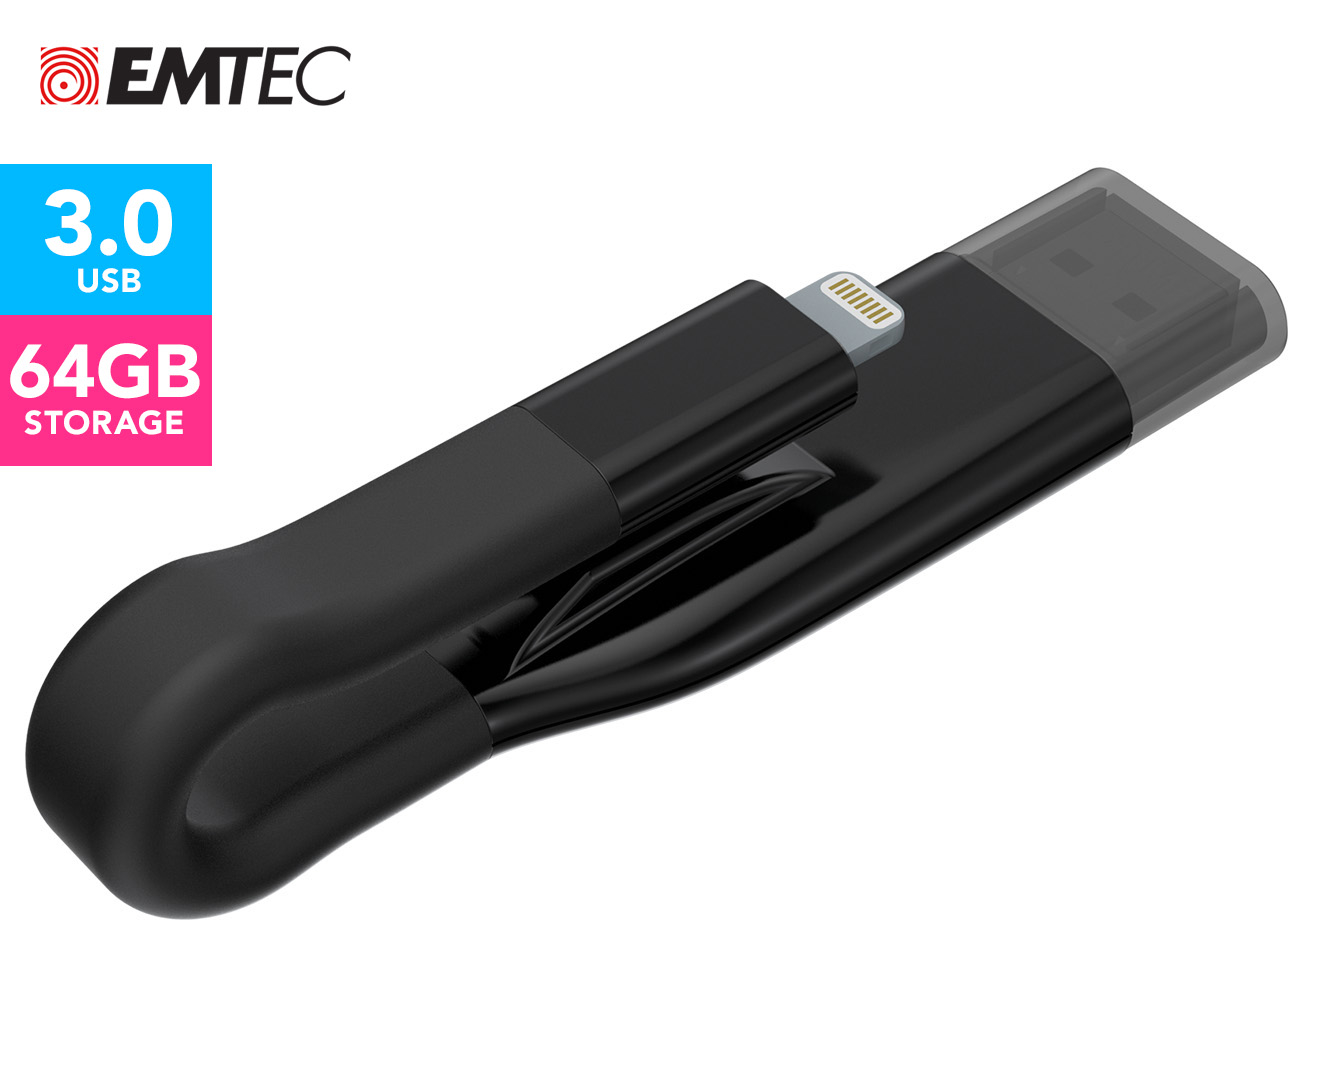 EMTEC iCOBRA2 USB 3.0 2-in-1 64GB Flash Drive - Black